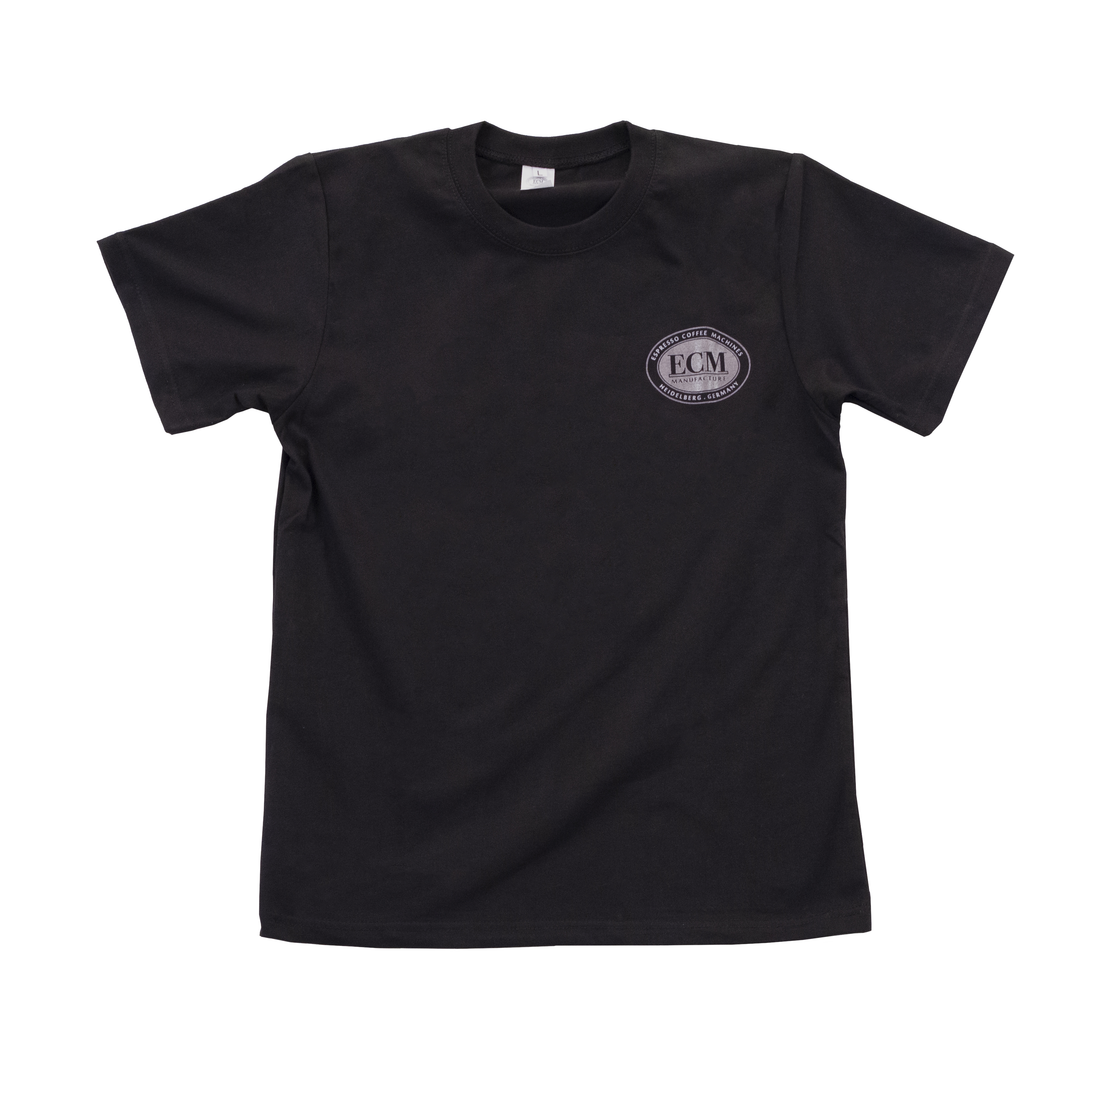 ECM Black Logo T-Shirt - Size S